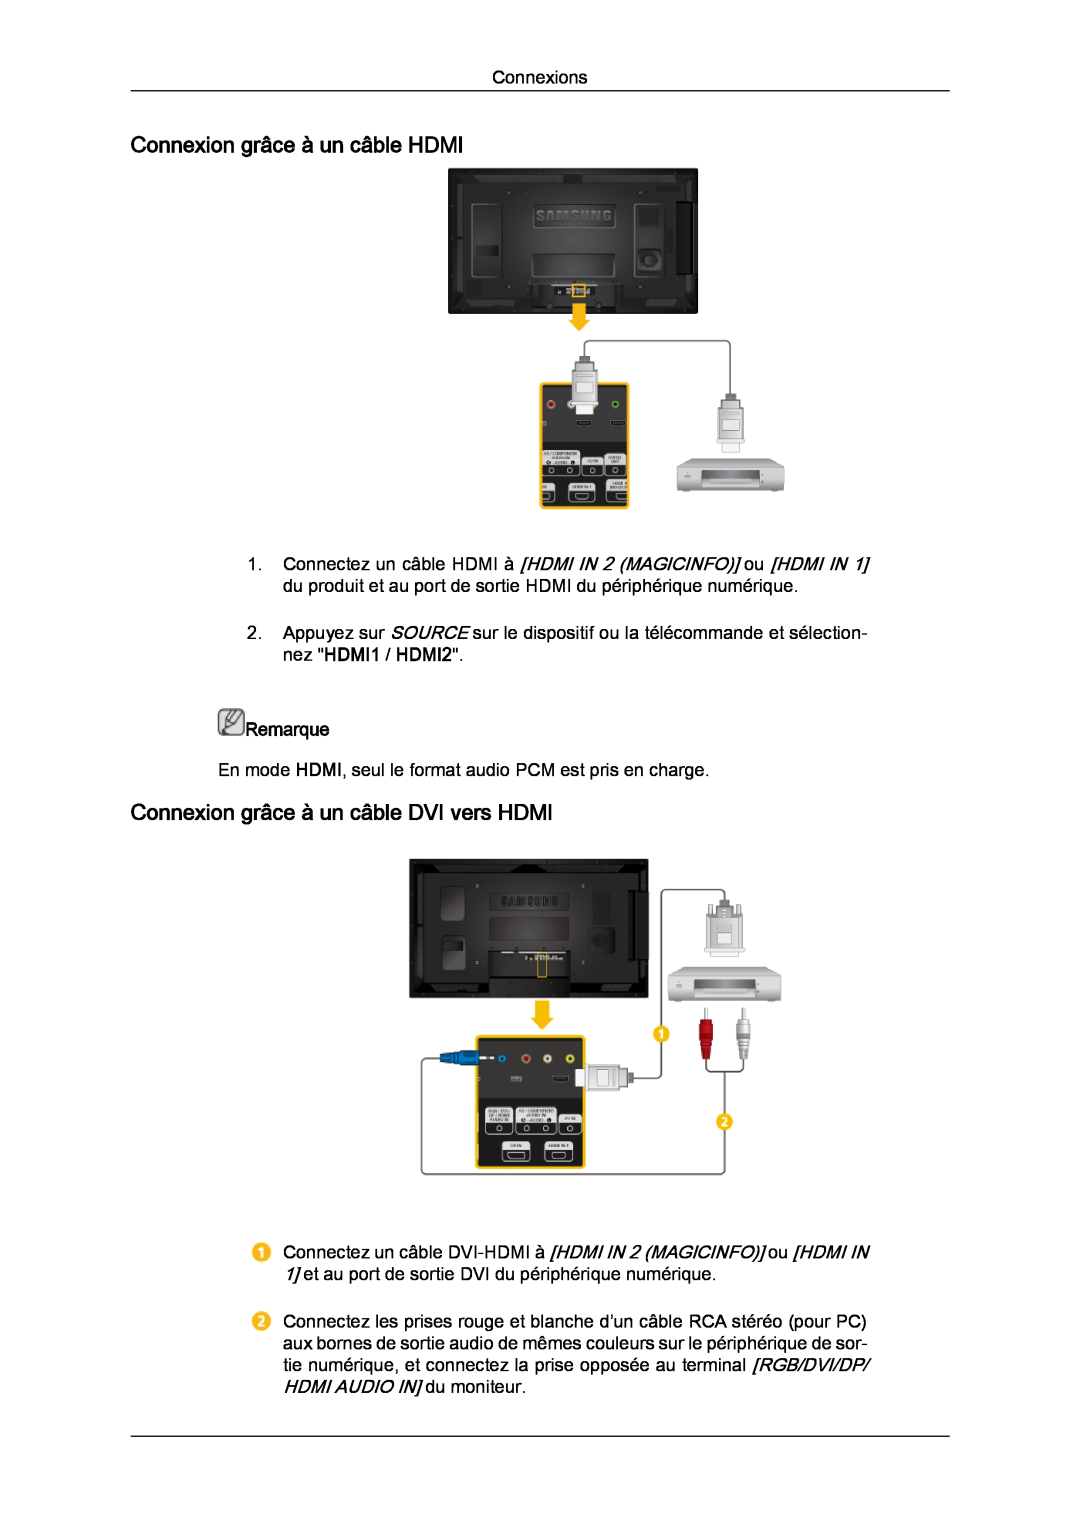 Samsung LH40CRPMBC/EN, LH46CRPMBD/EN Connexion grâce à un câble HDMI, Connexion grâce à un câble DVI vers HDMI, Remarque 